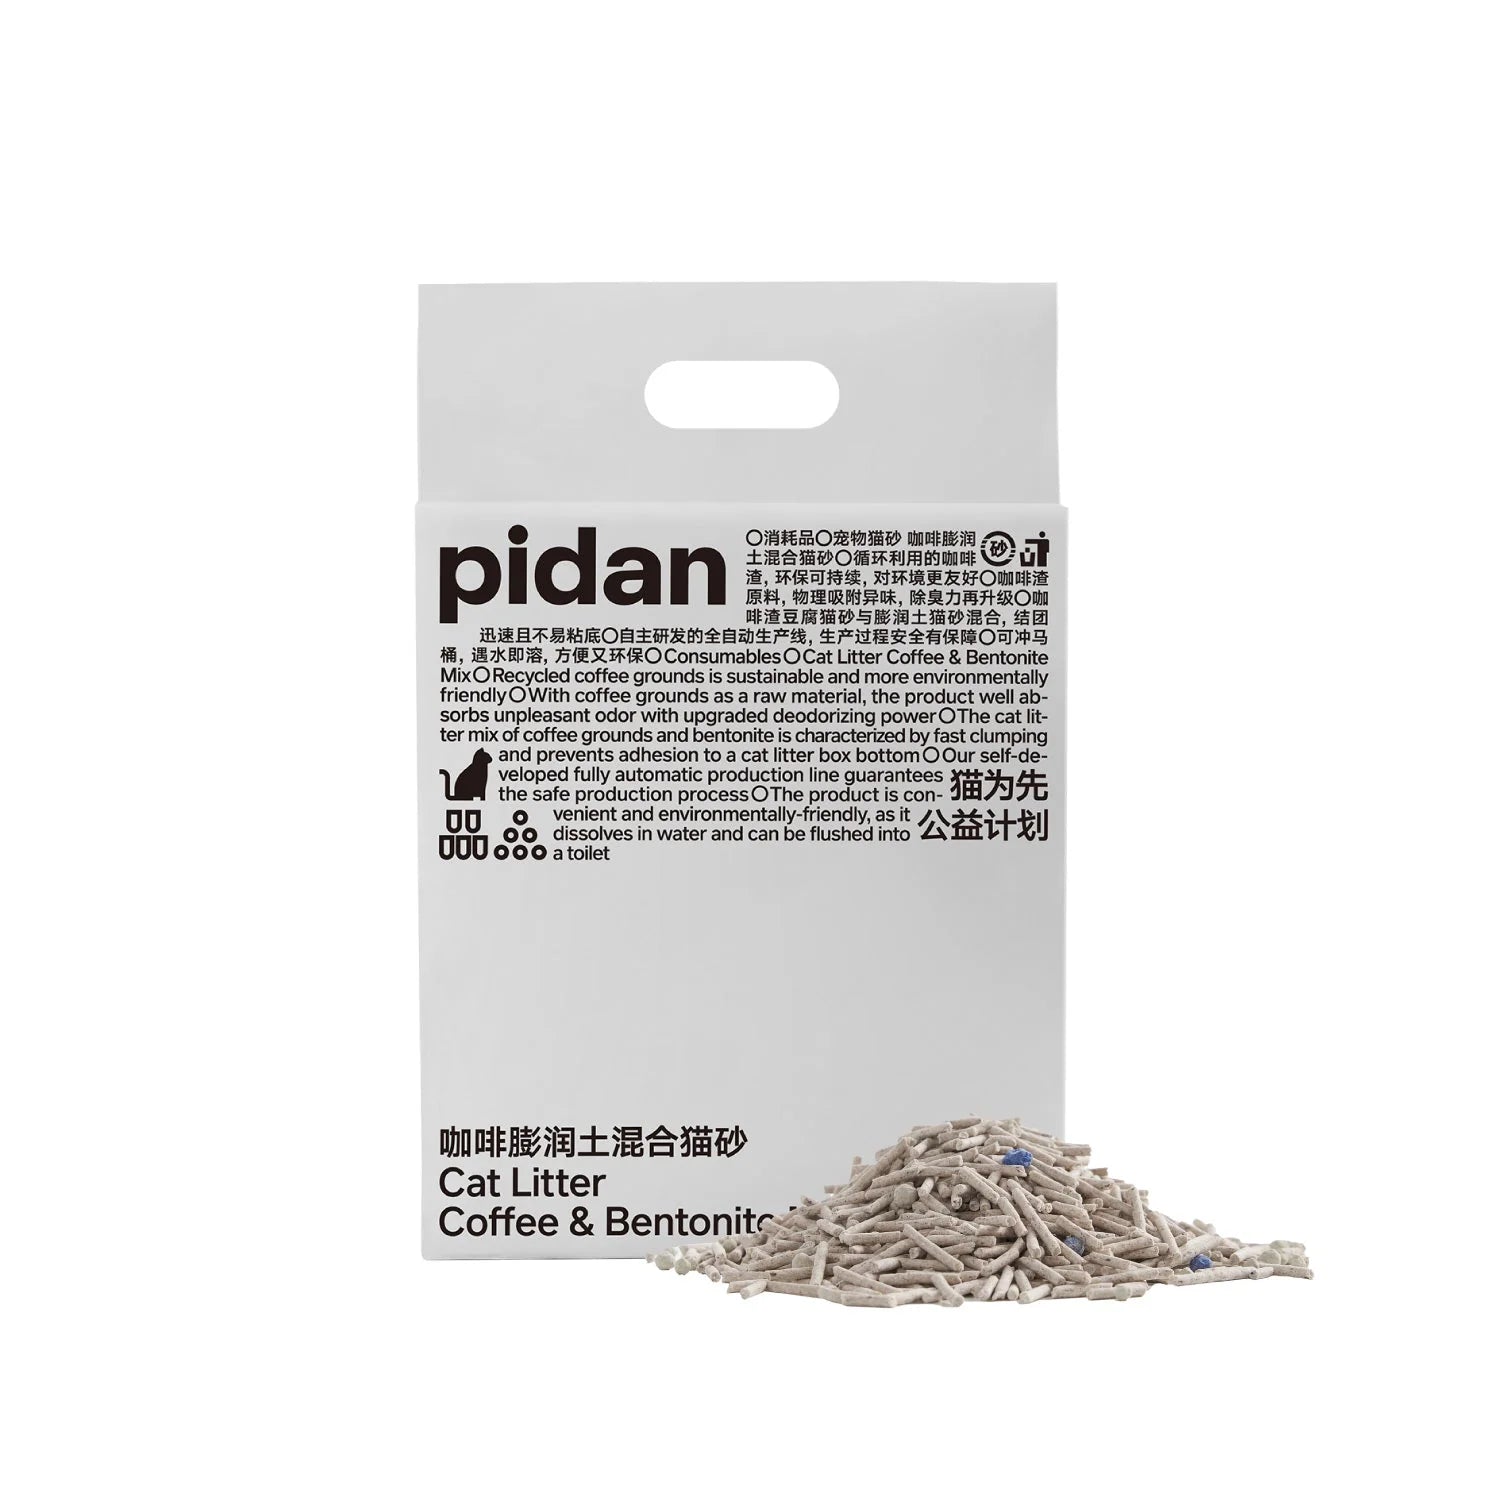 pidan - NEW! Coffee & Bentonite Mix Tofu Cat Litter